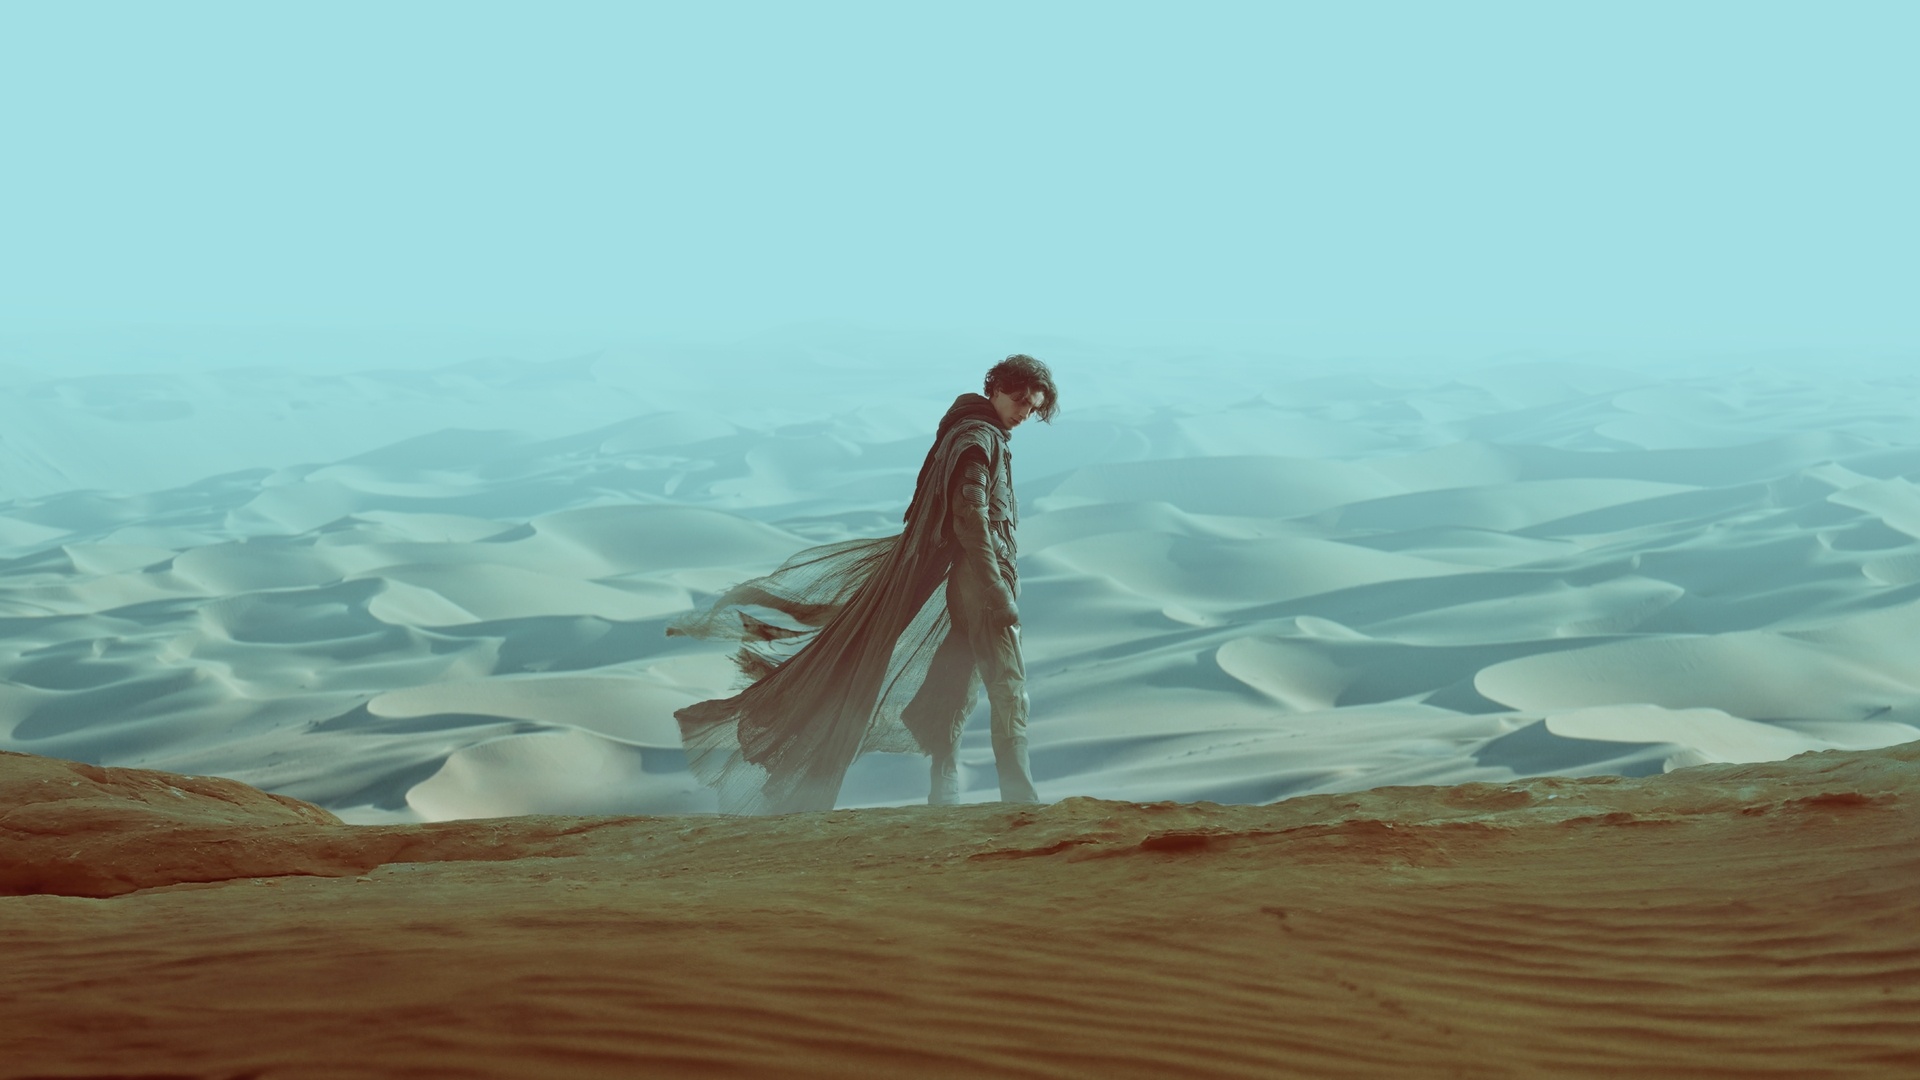 Dune desktop wallpaper free download